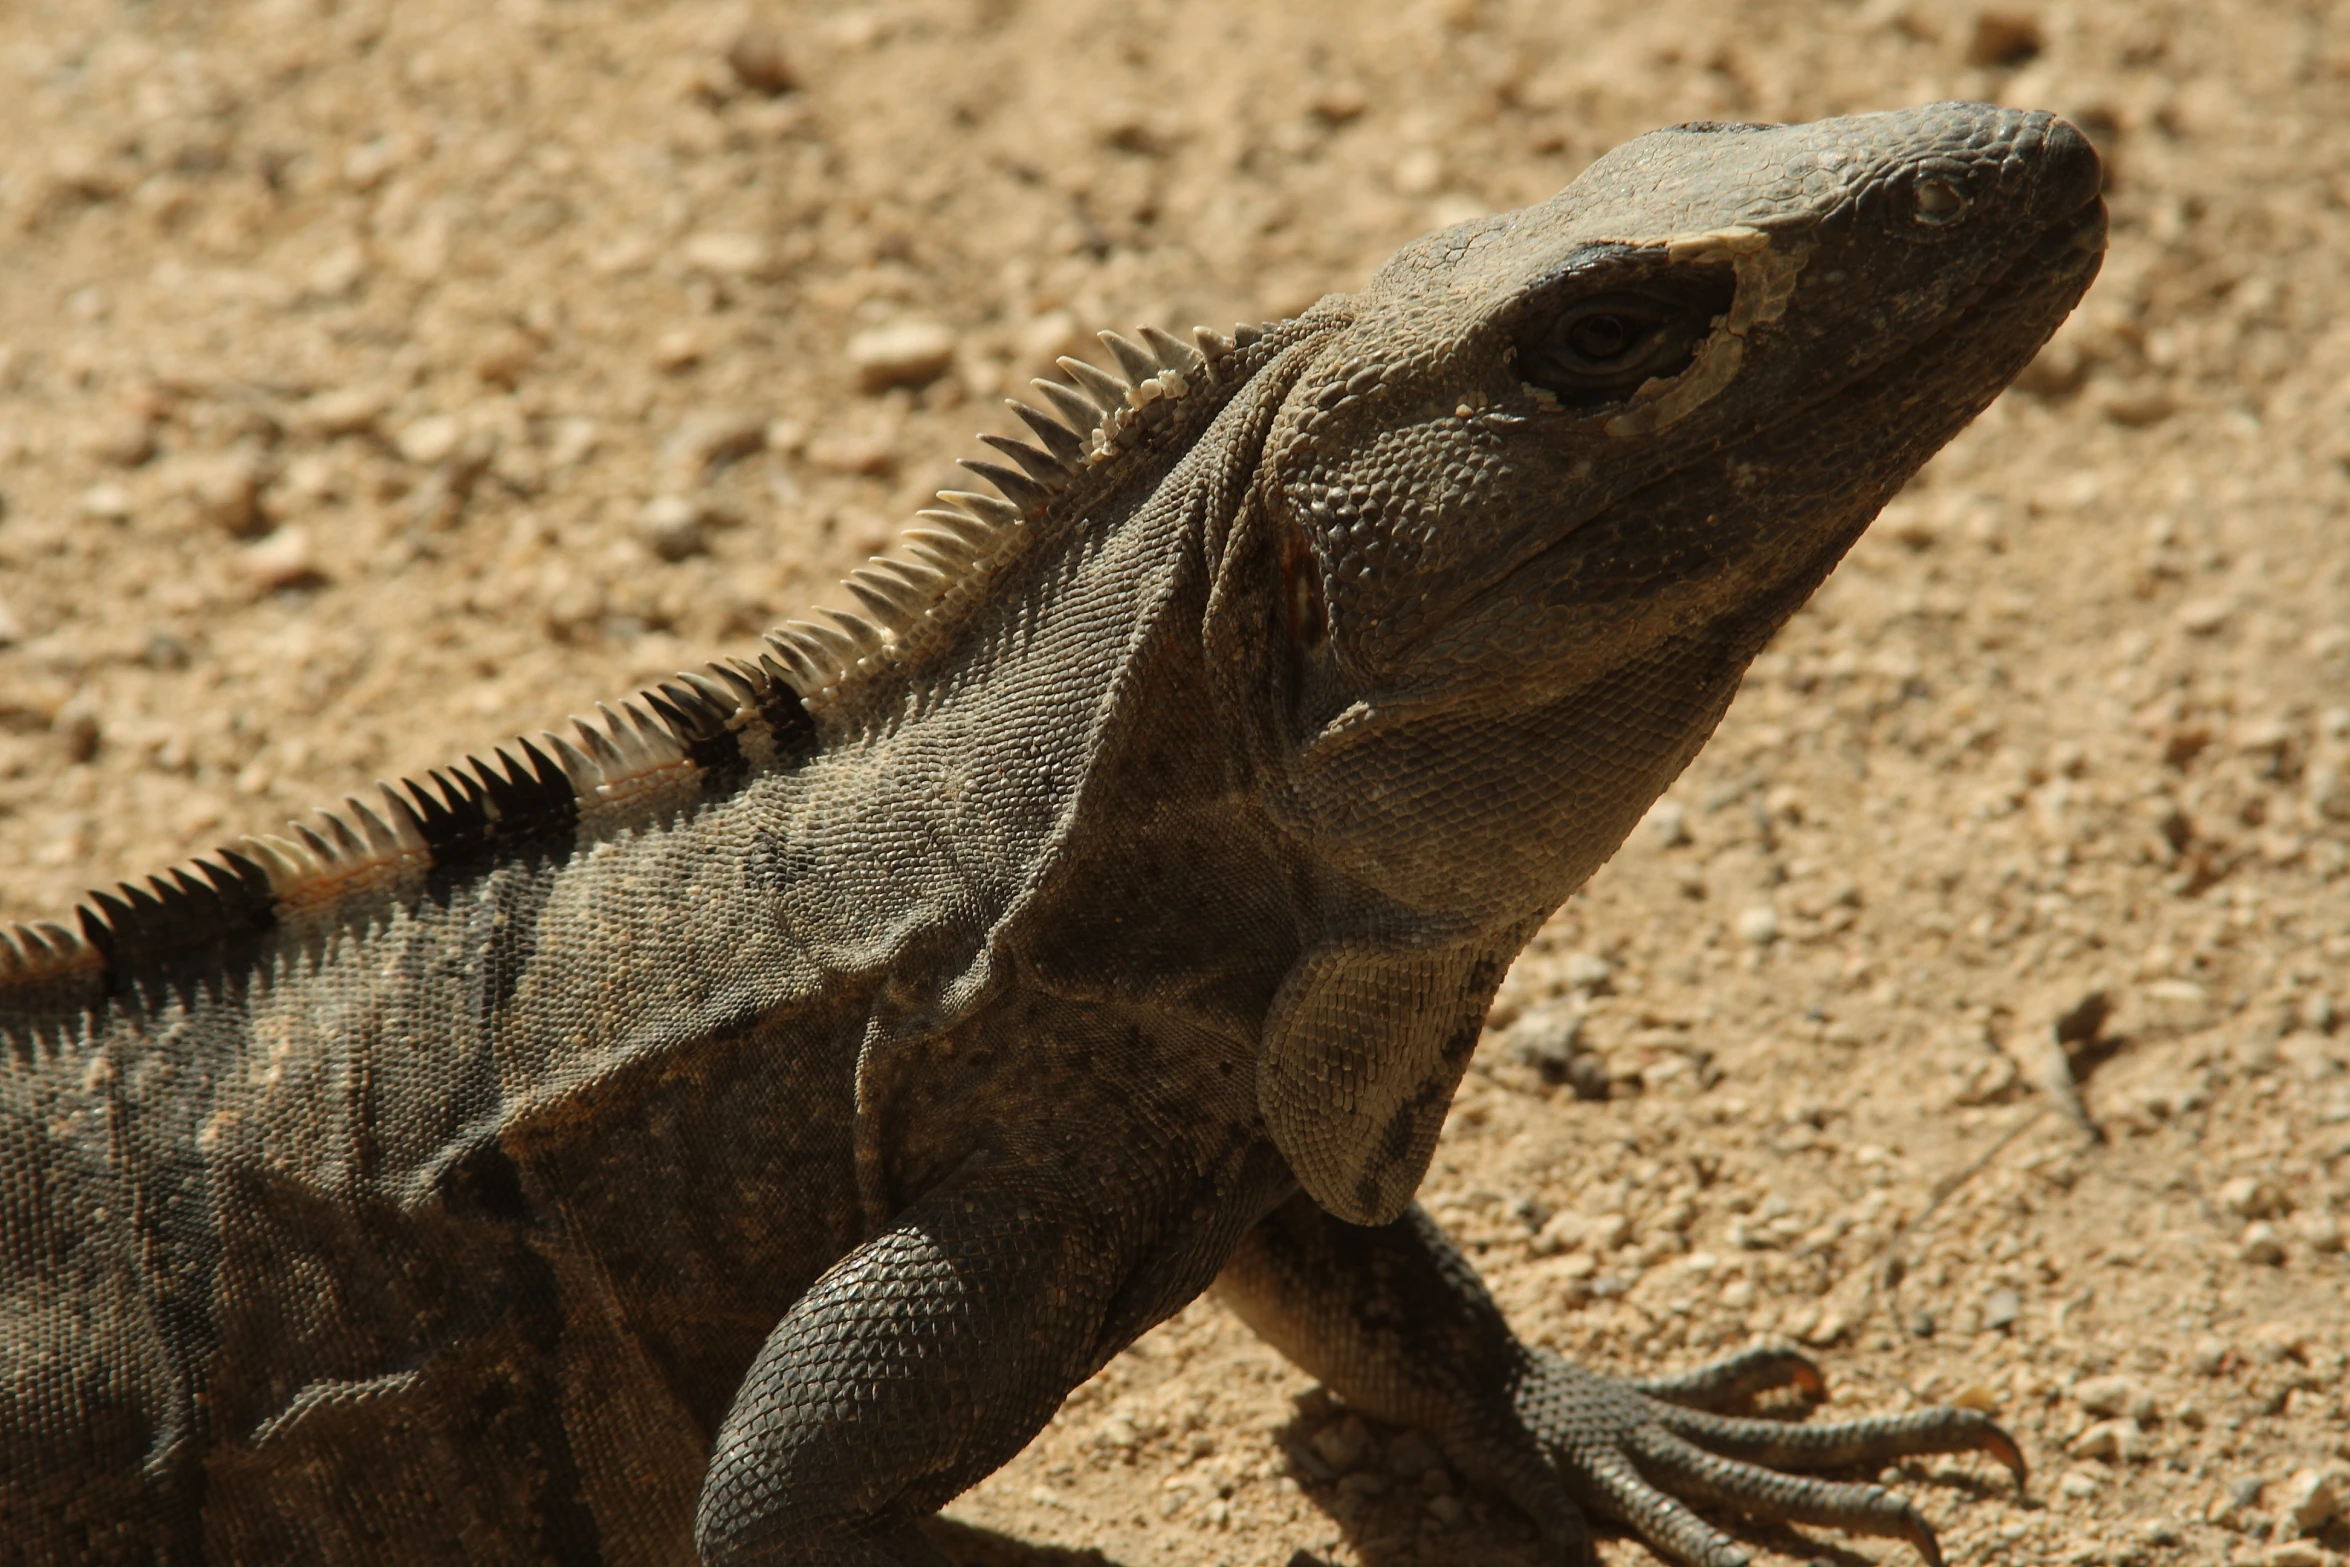 a very big cute lizard laying in the dirt